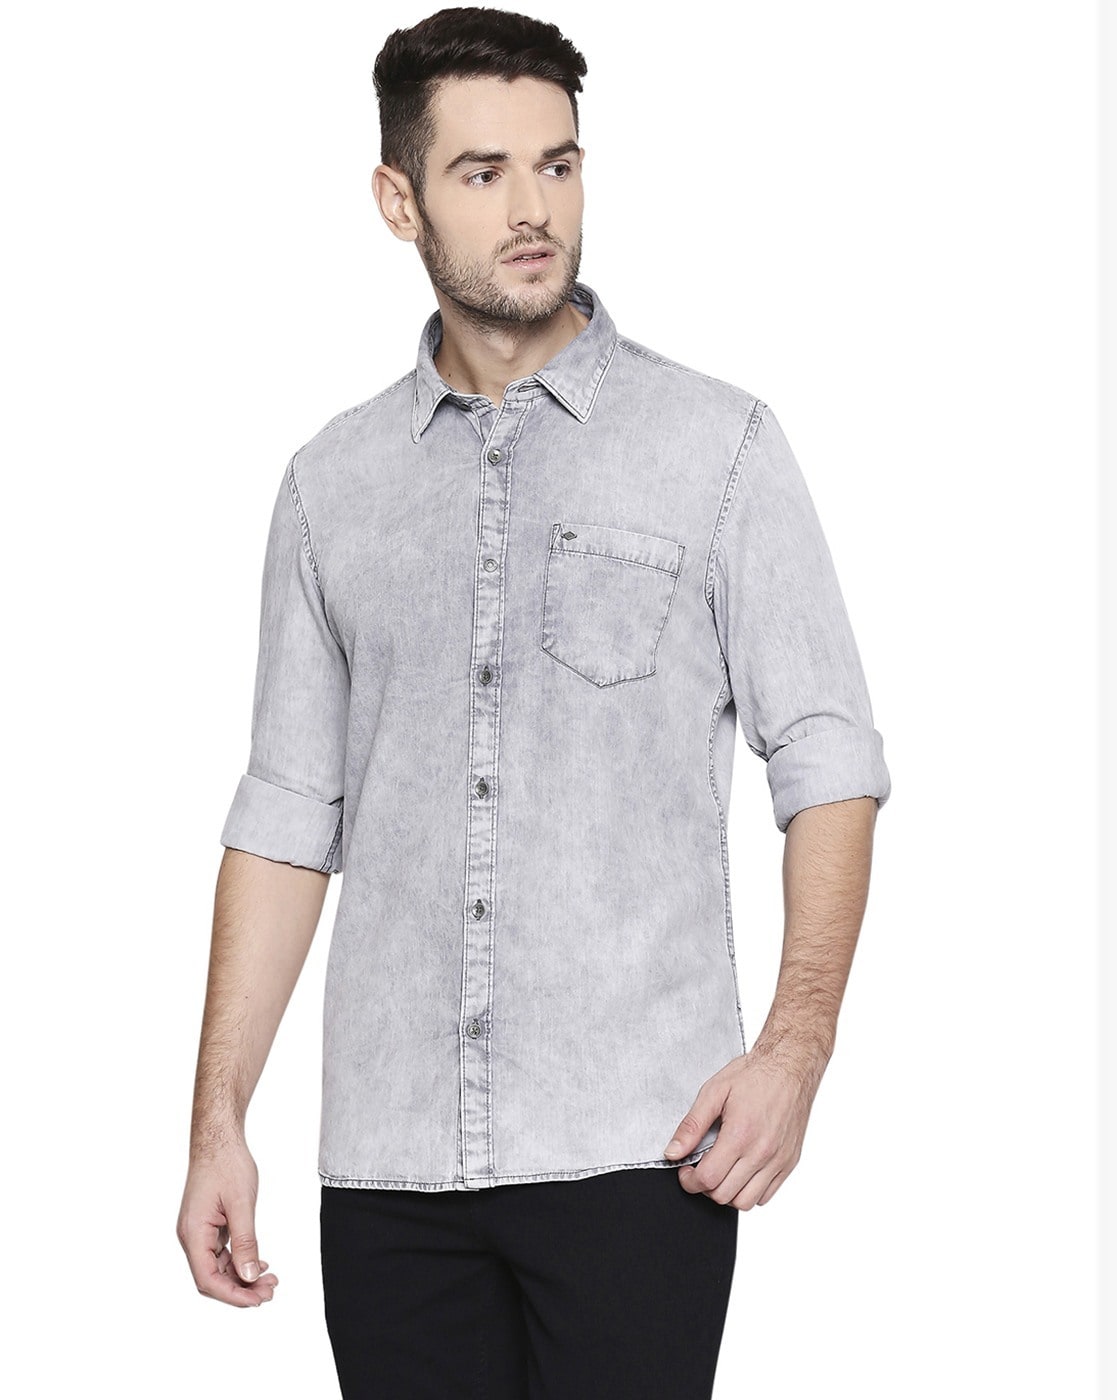 Men's Grey Denim Shirt - Evilato